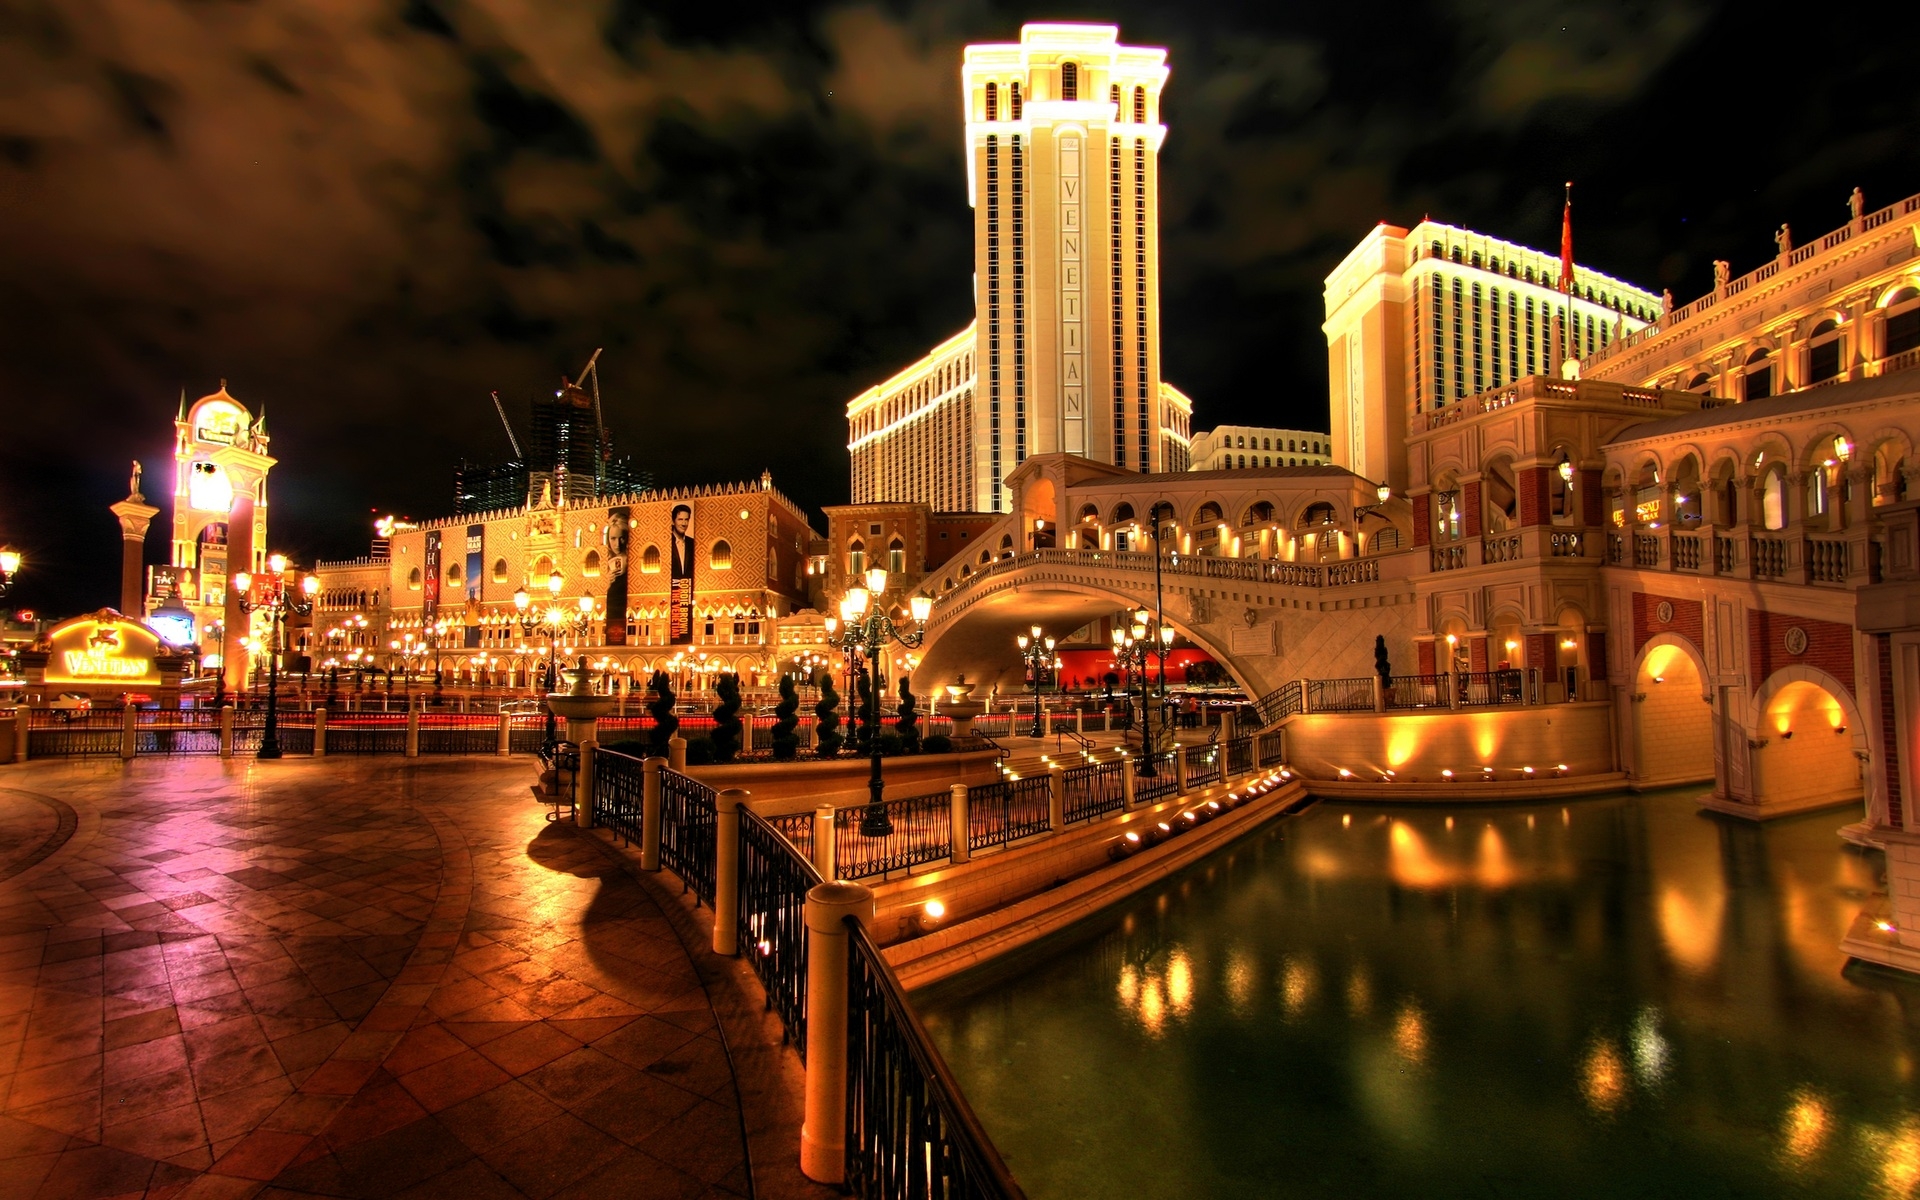 Venetian Resort Hotel Casino Las Vegas147612424 - Venetian Resort Hotel Casino Las Vegas - Venetian, Vegas, Russia, Resort, Hotel, Casino